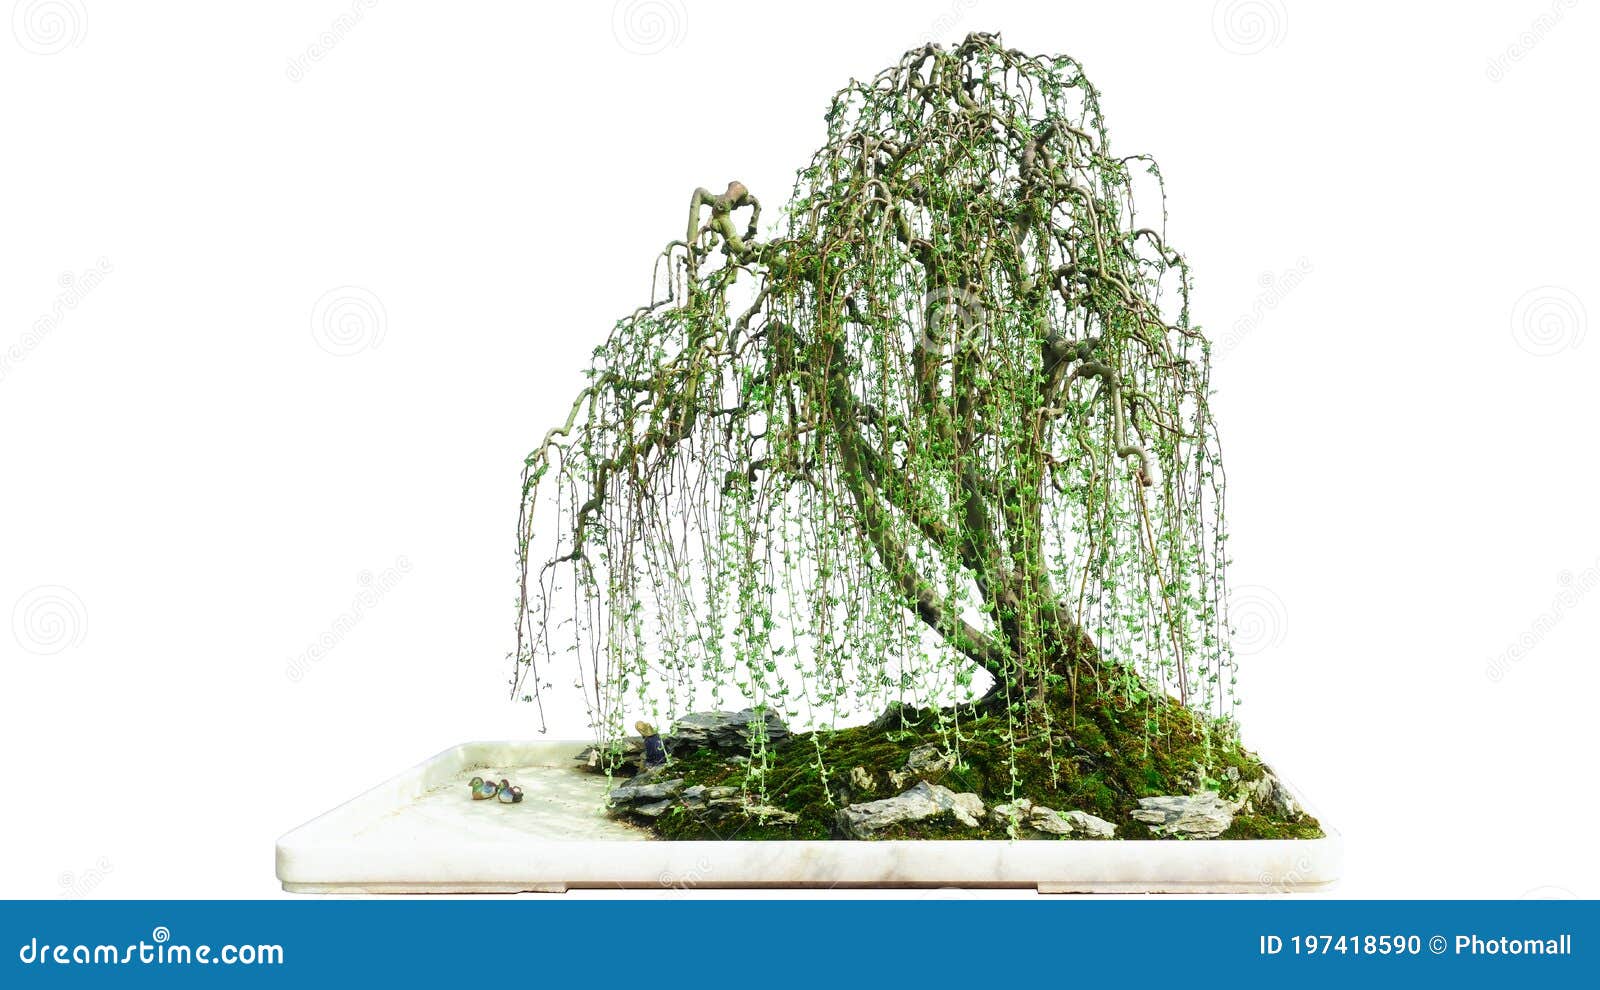 bonsai willow tree potted landscape garden art